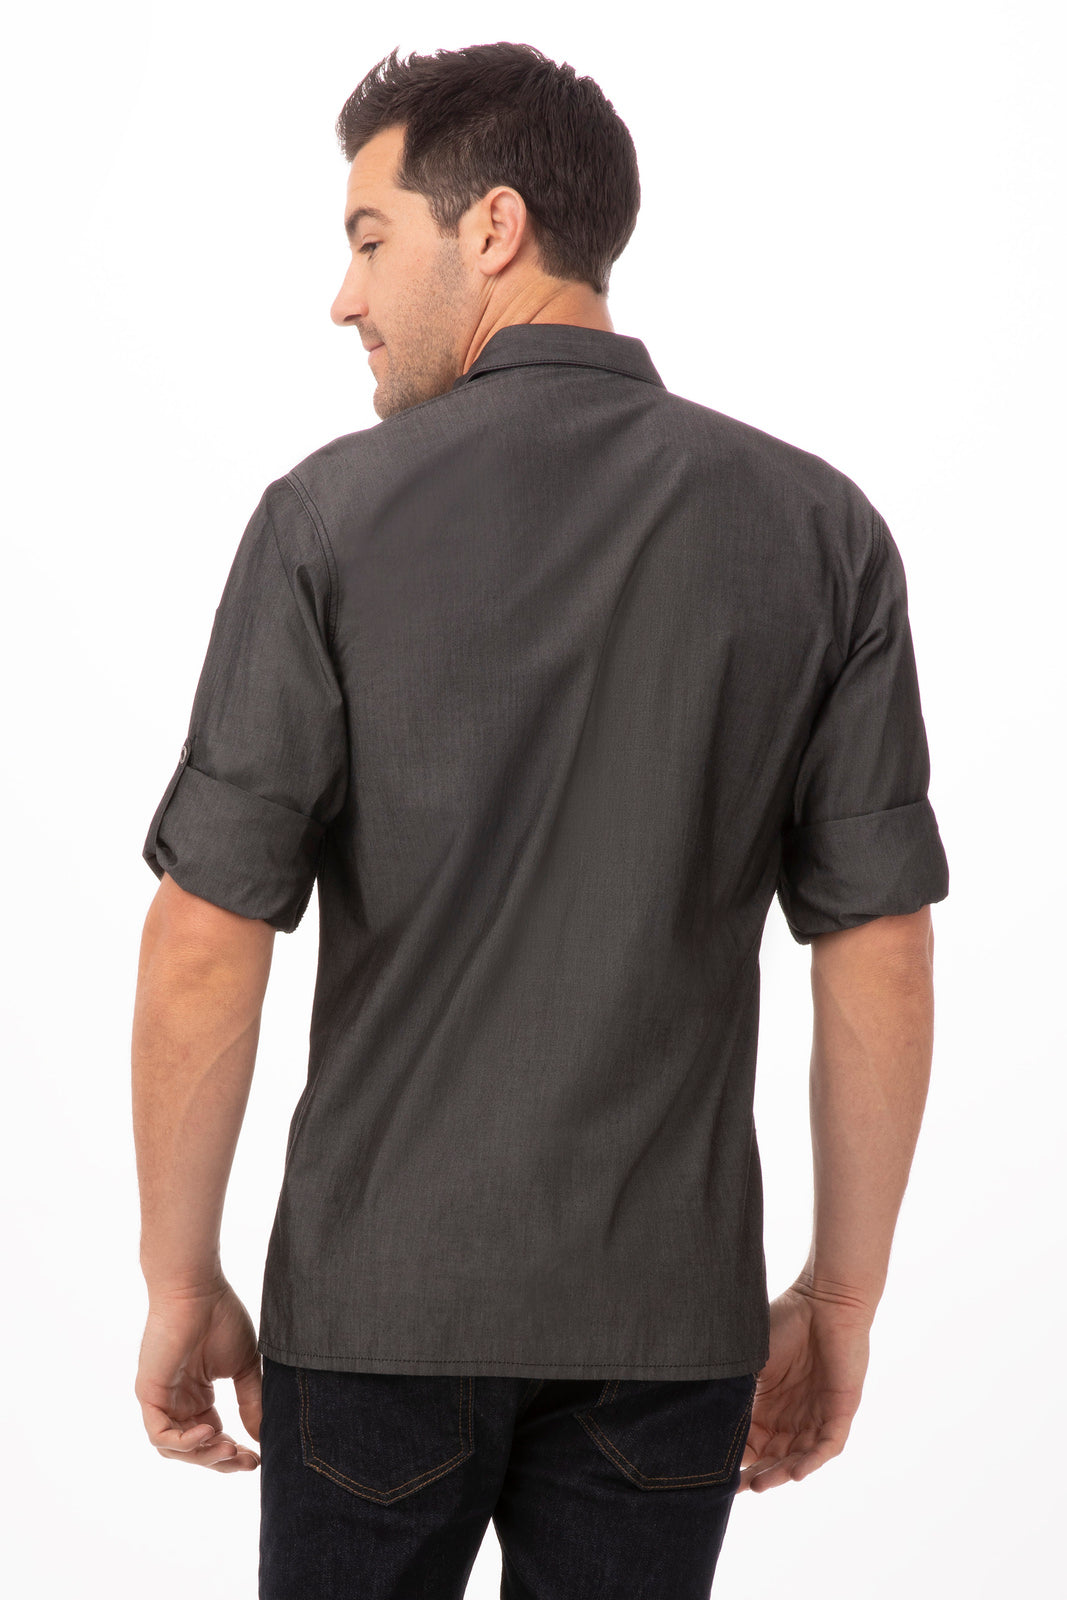 Chef Works Detroit Long-Sleeve Denim Shirt-(SKL001)